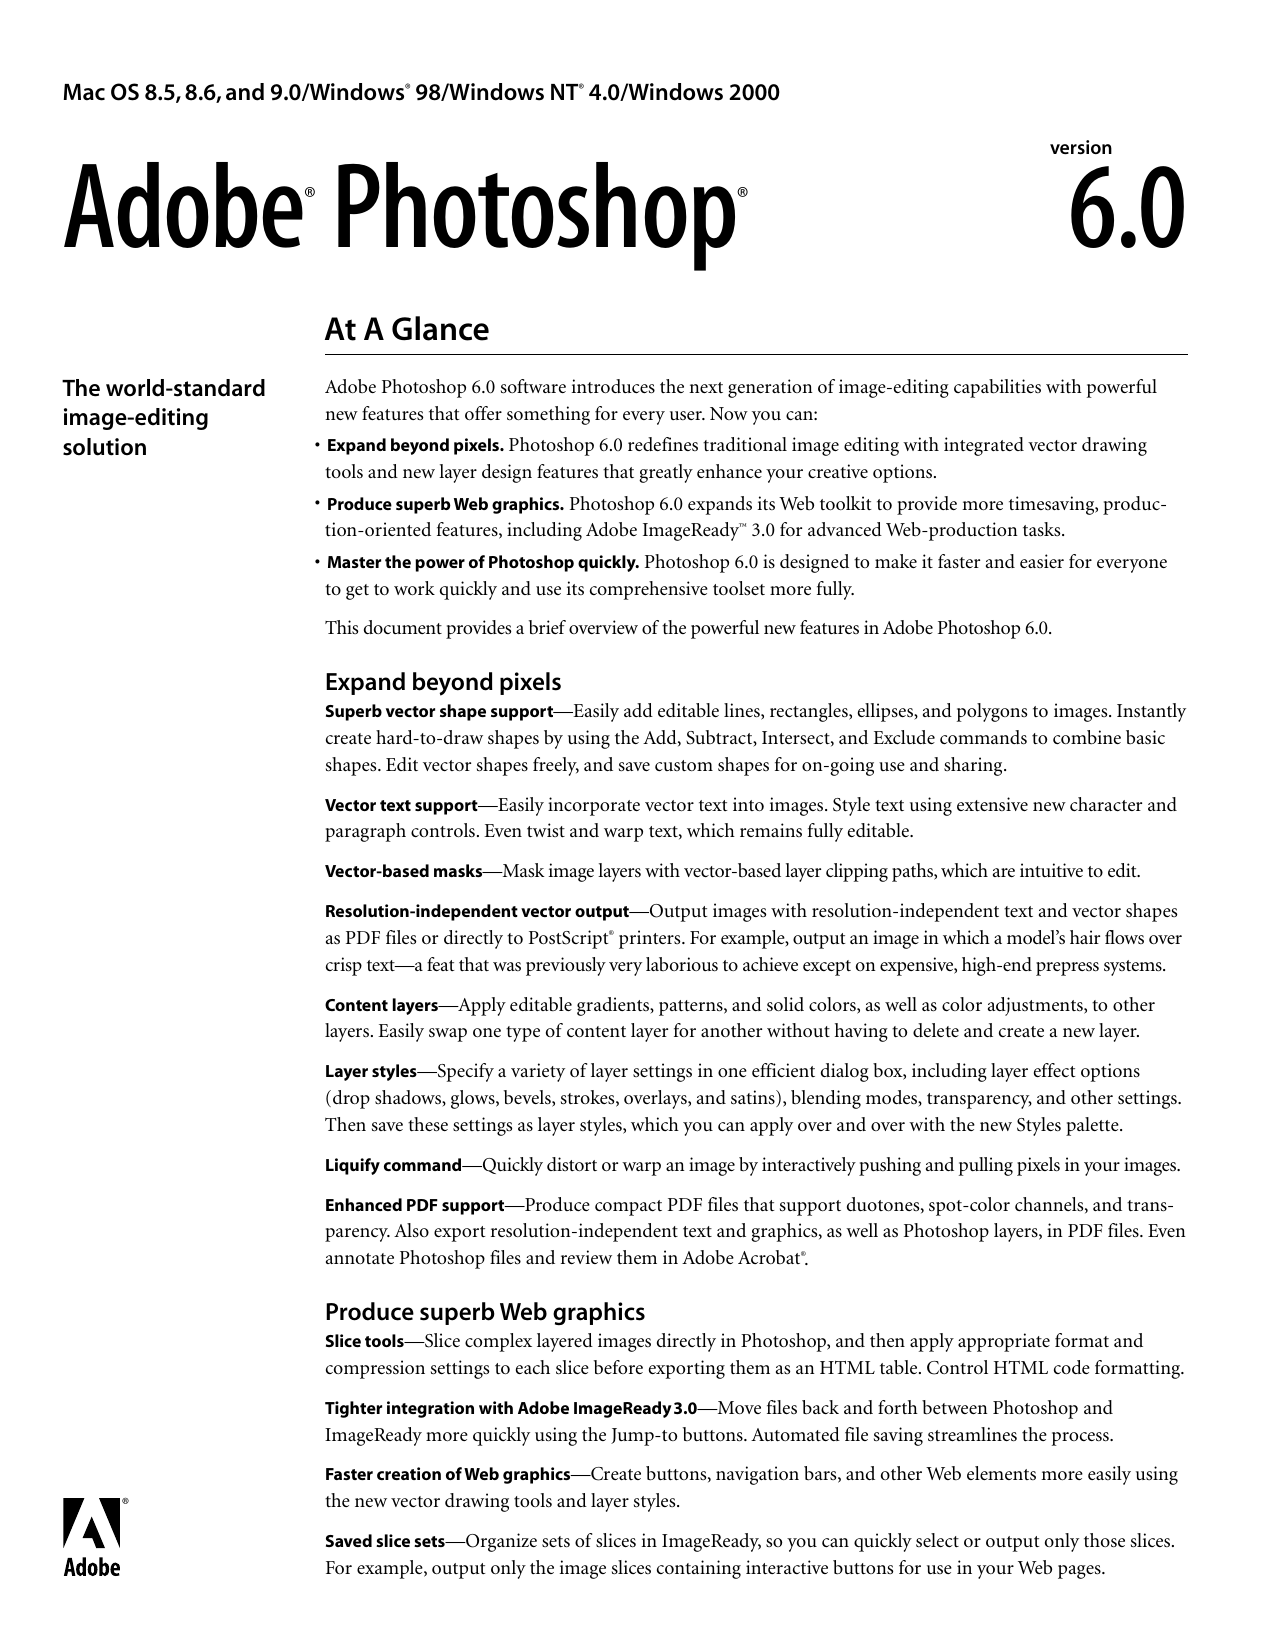 adobe photoshop 6.0 for mac